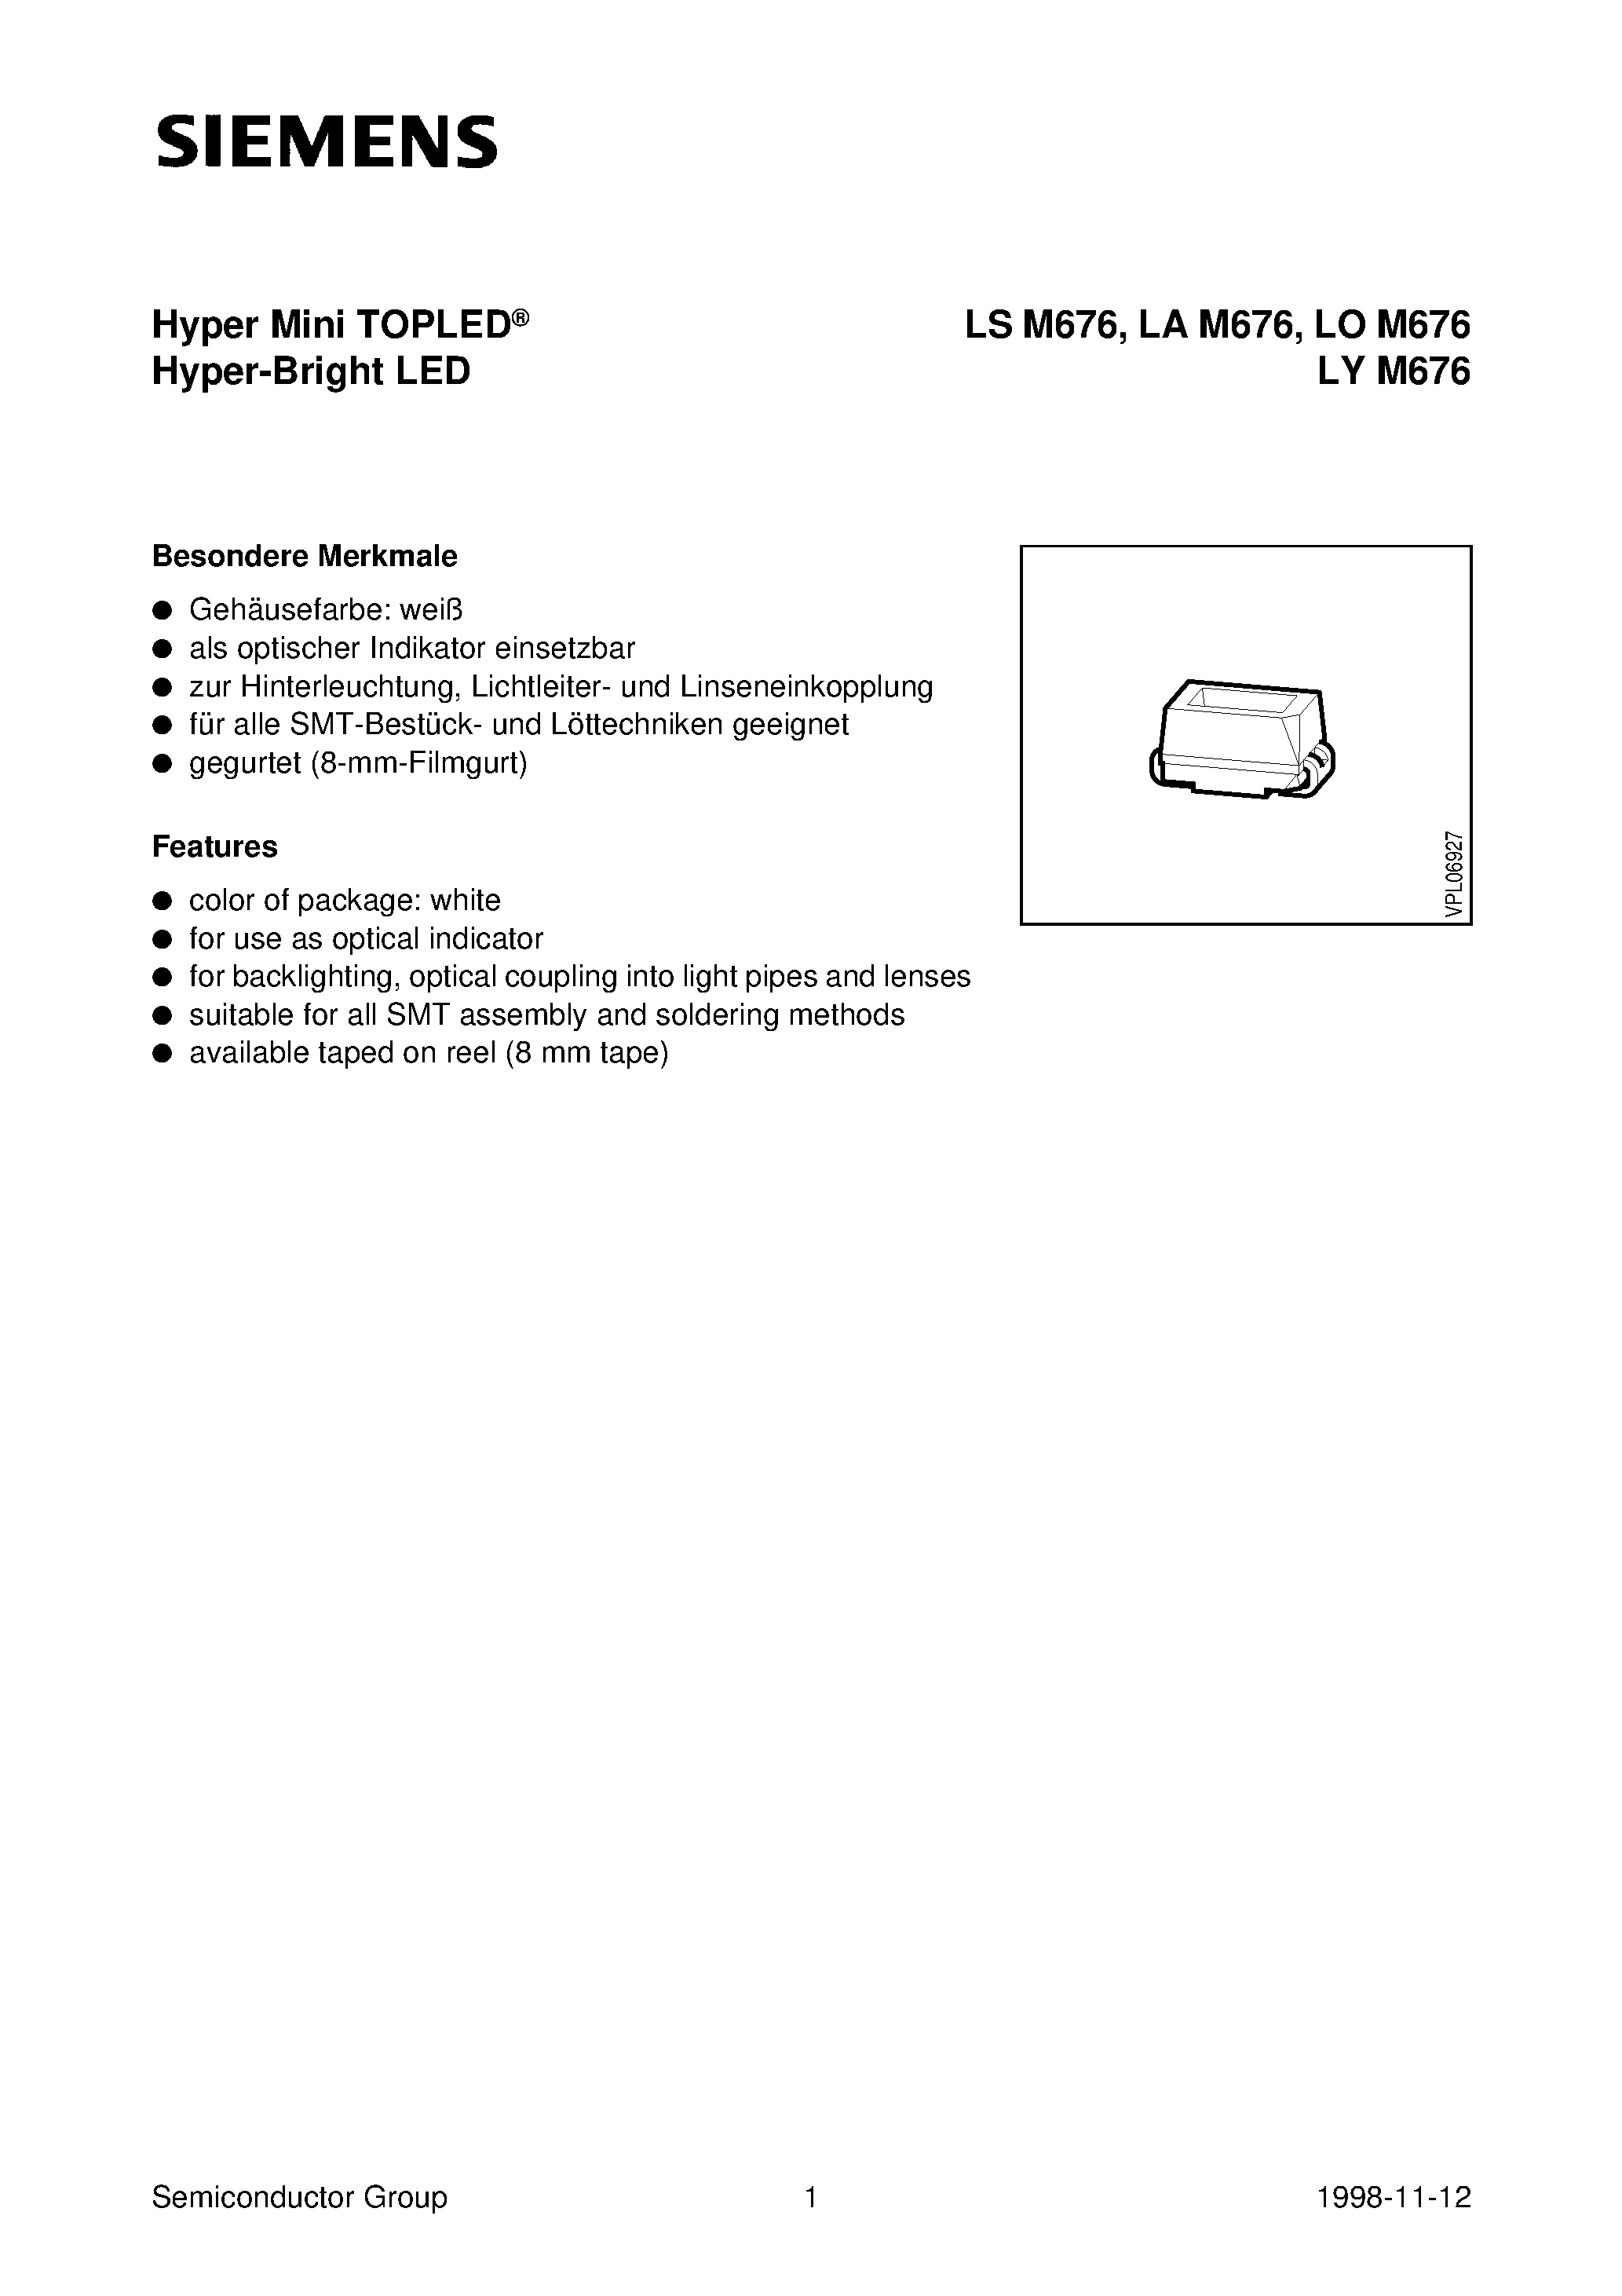 Datasheet LAM676-Q - Hyper Mini TOPLED Hyper-Bright LED page 1